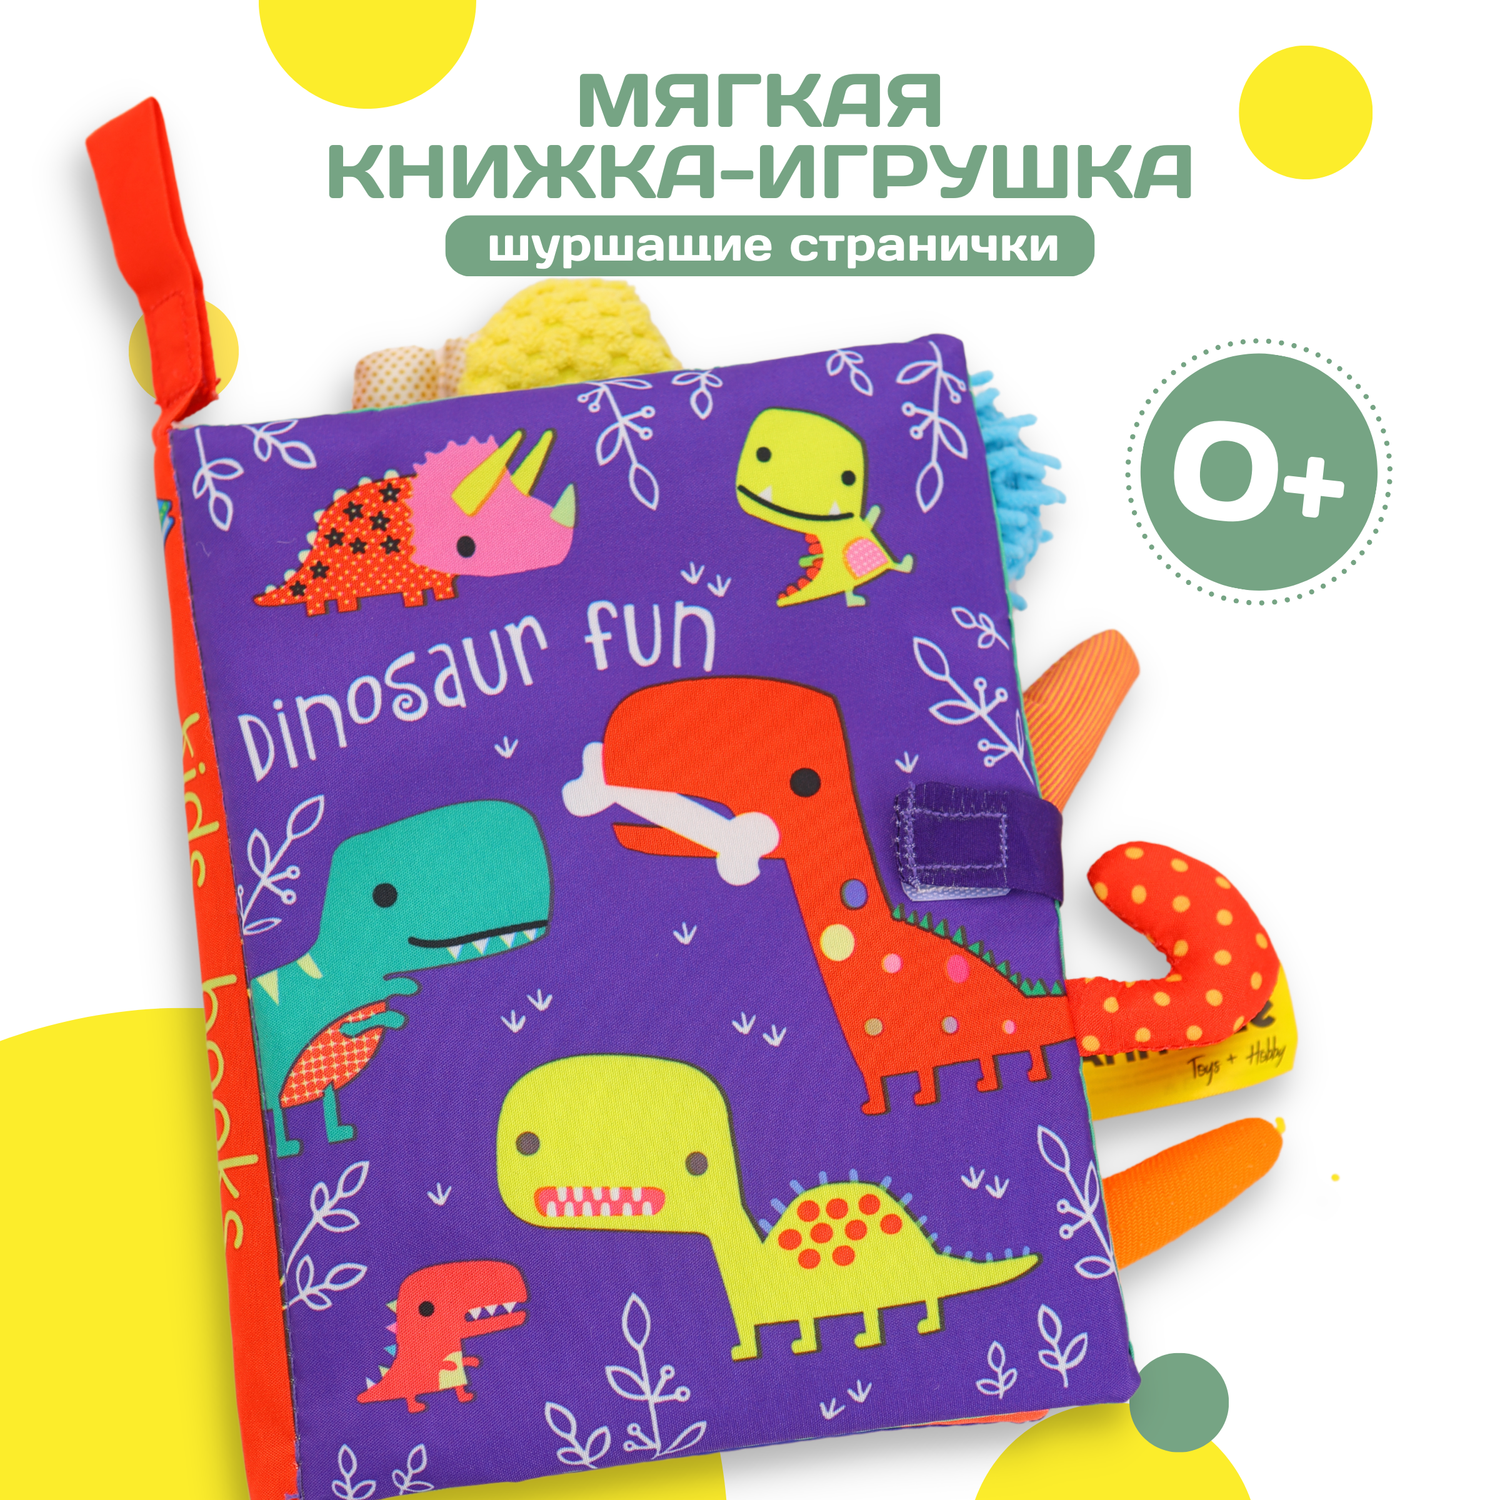 Книжка-игрушка Anmuze Мягкая шуршалка Динозавры фиолетовая - фото 1